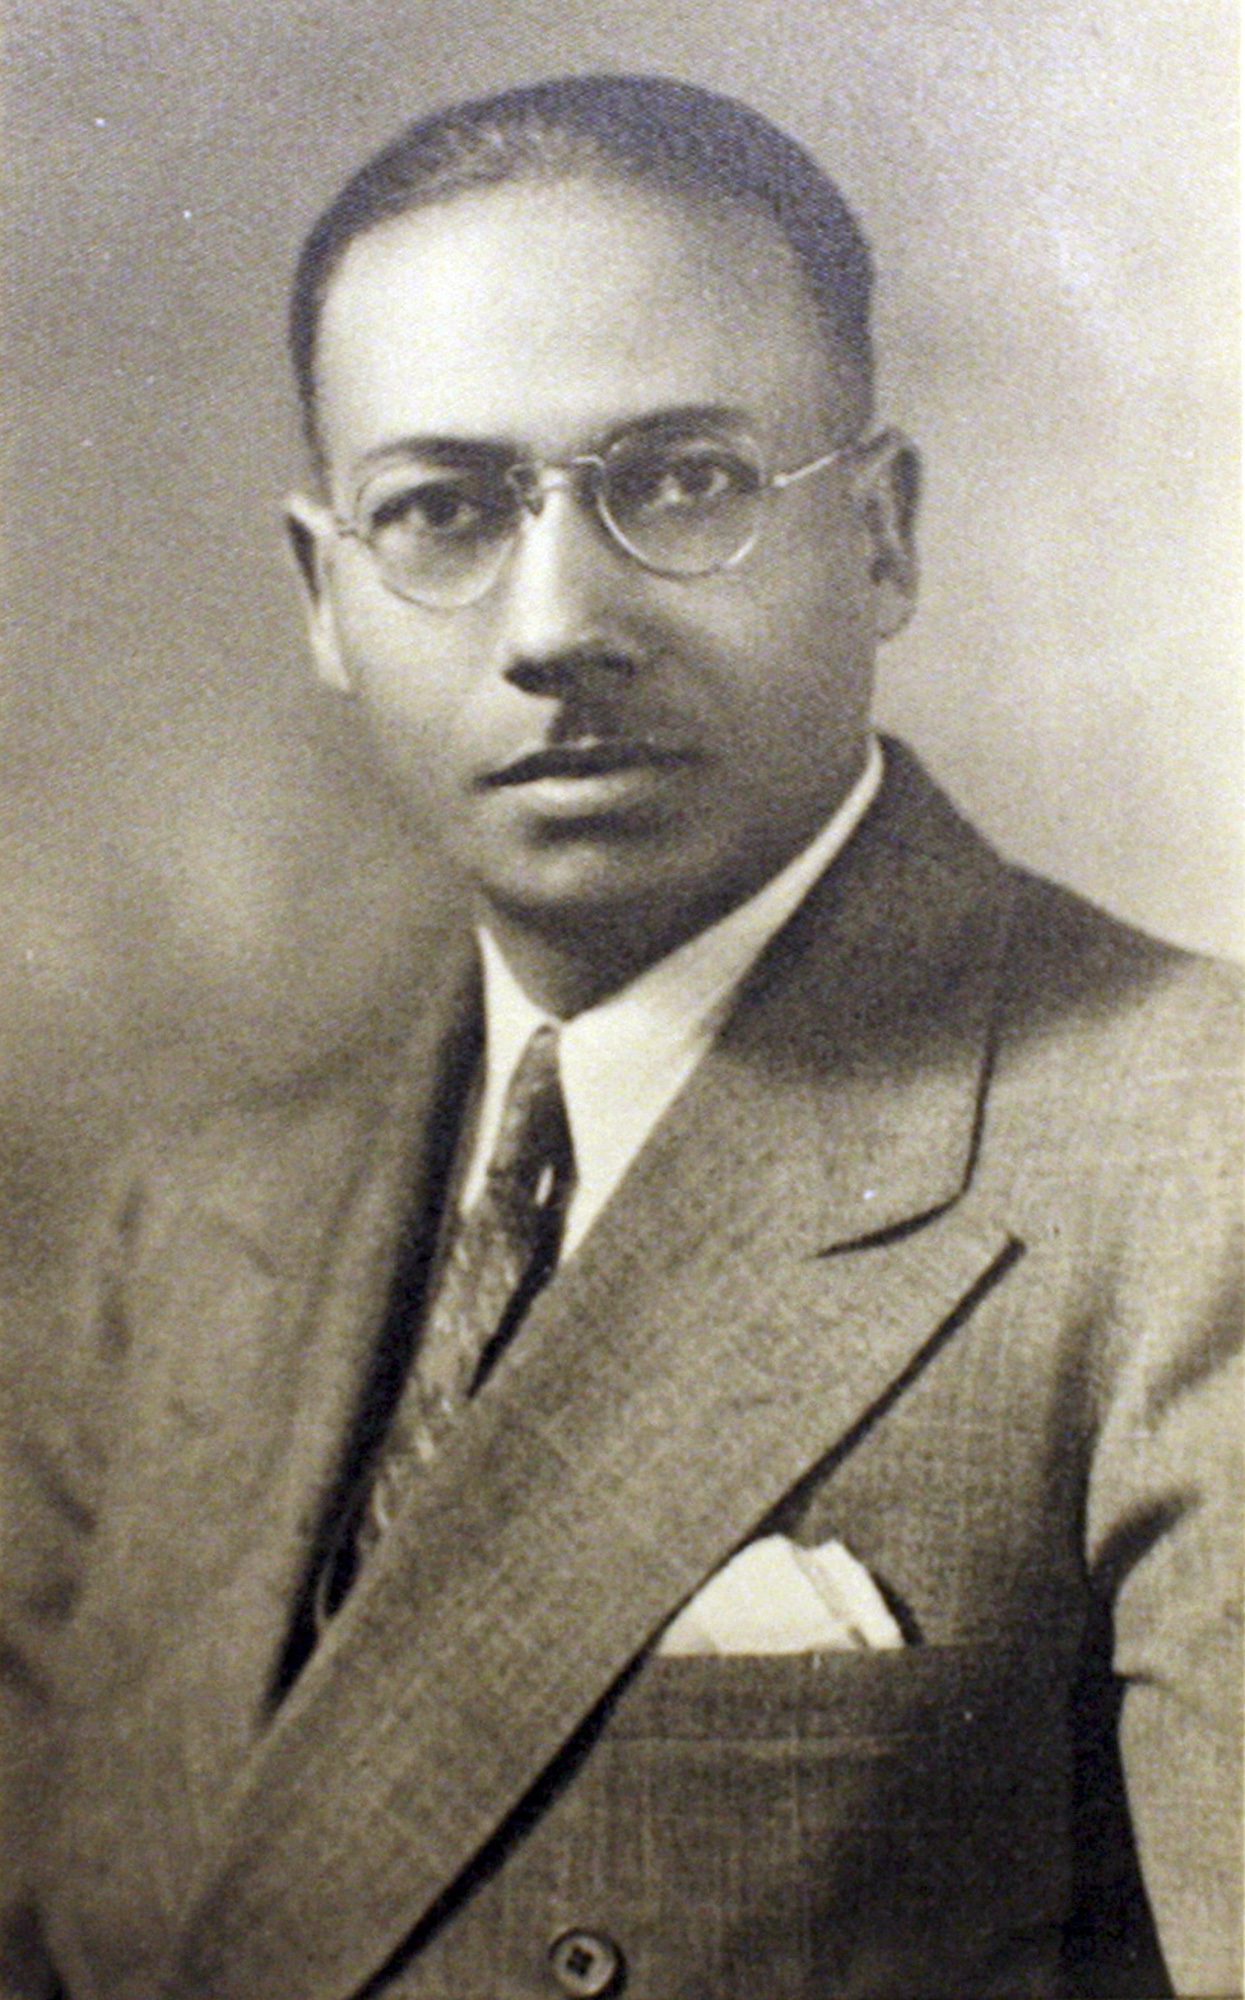 LORENZO TURNER; 1940-1941